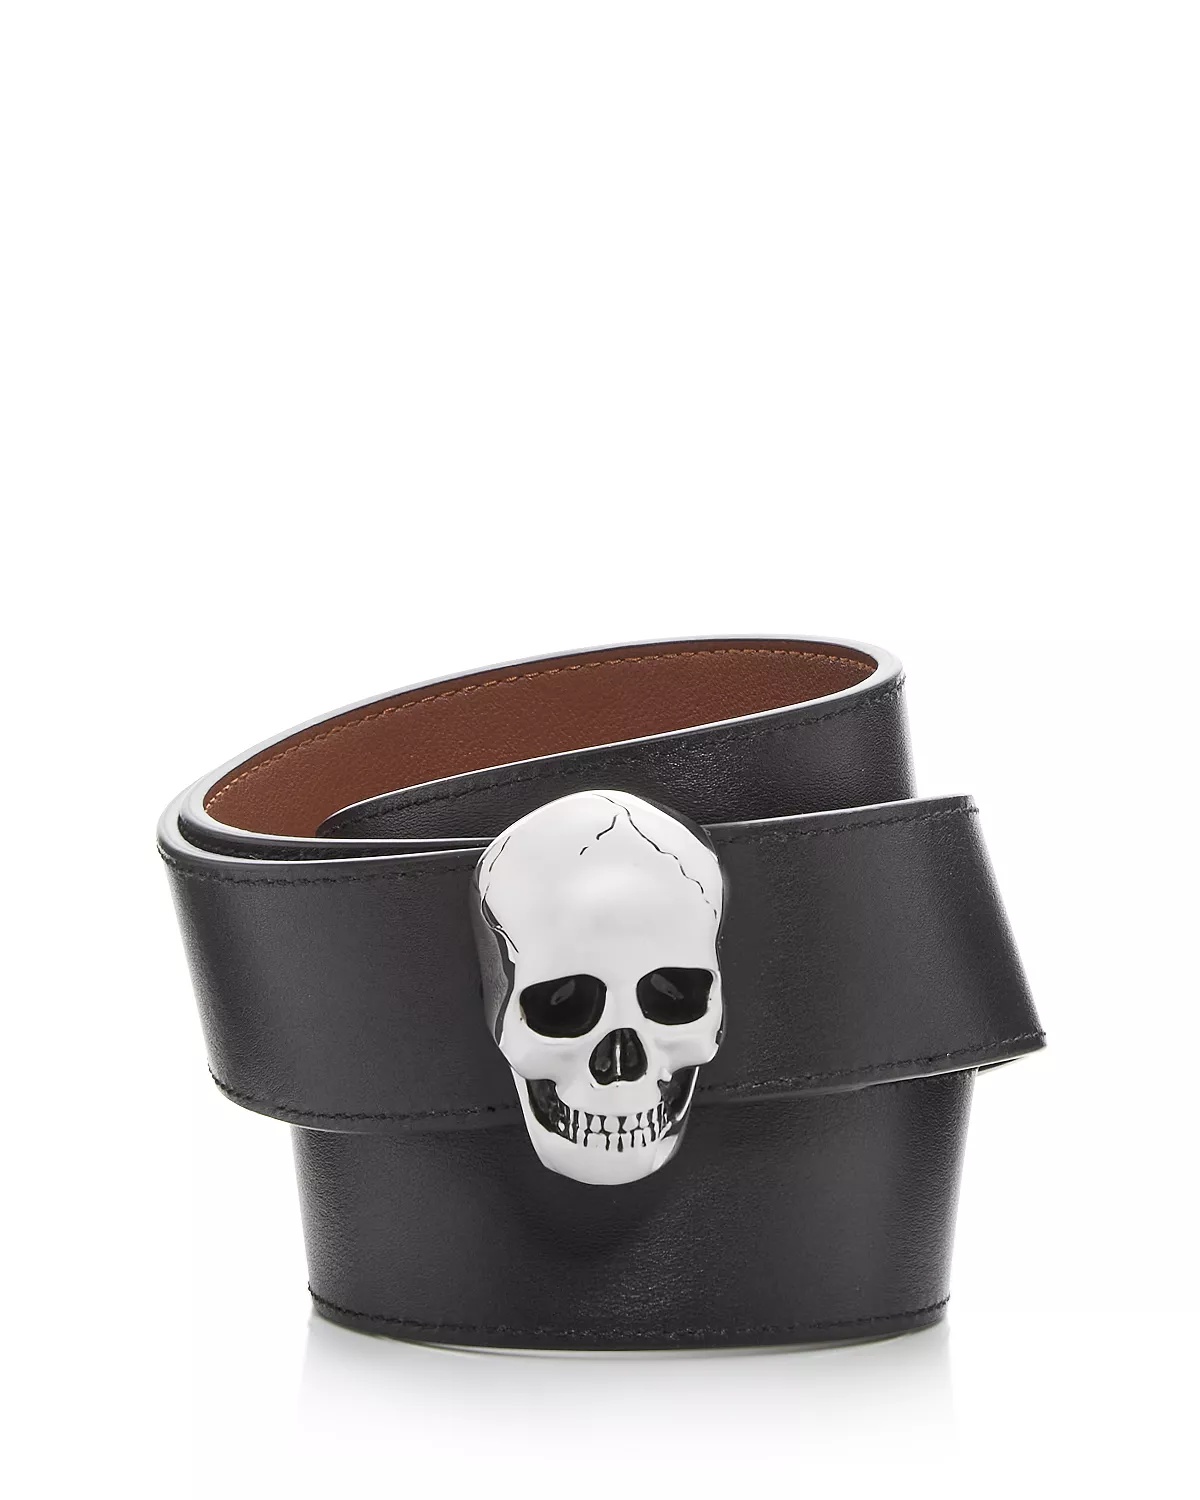 Men's New 3D Buckle Leather Belt - 1